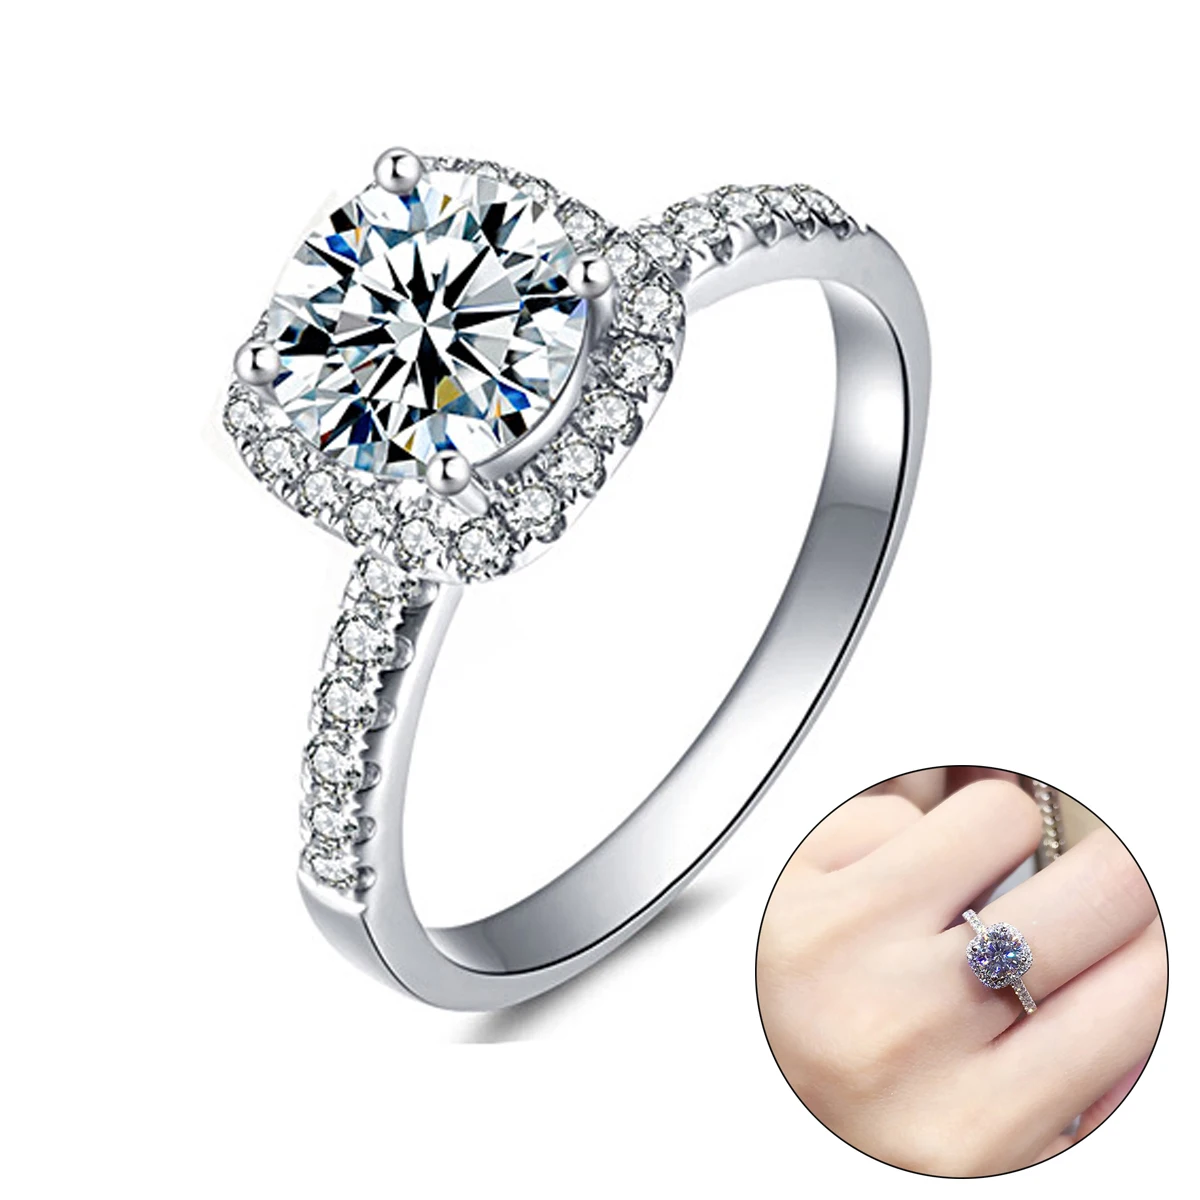 Buy TANISHQ 950 Platinum Diamond Ring 16.40 mm Online - Best Price TANISHQ  950 Platinum Diamond Ring 16.40 mm - Justdial Shop Online.